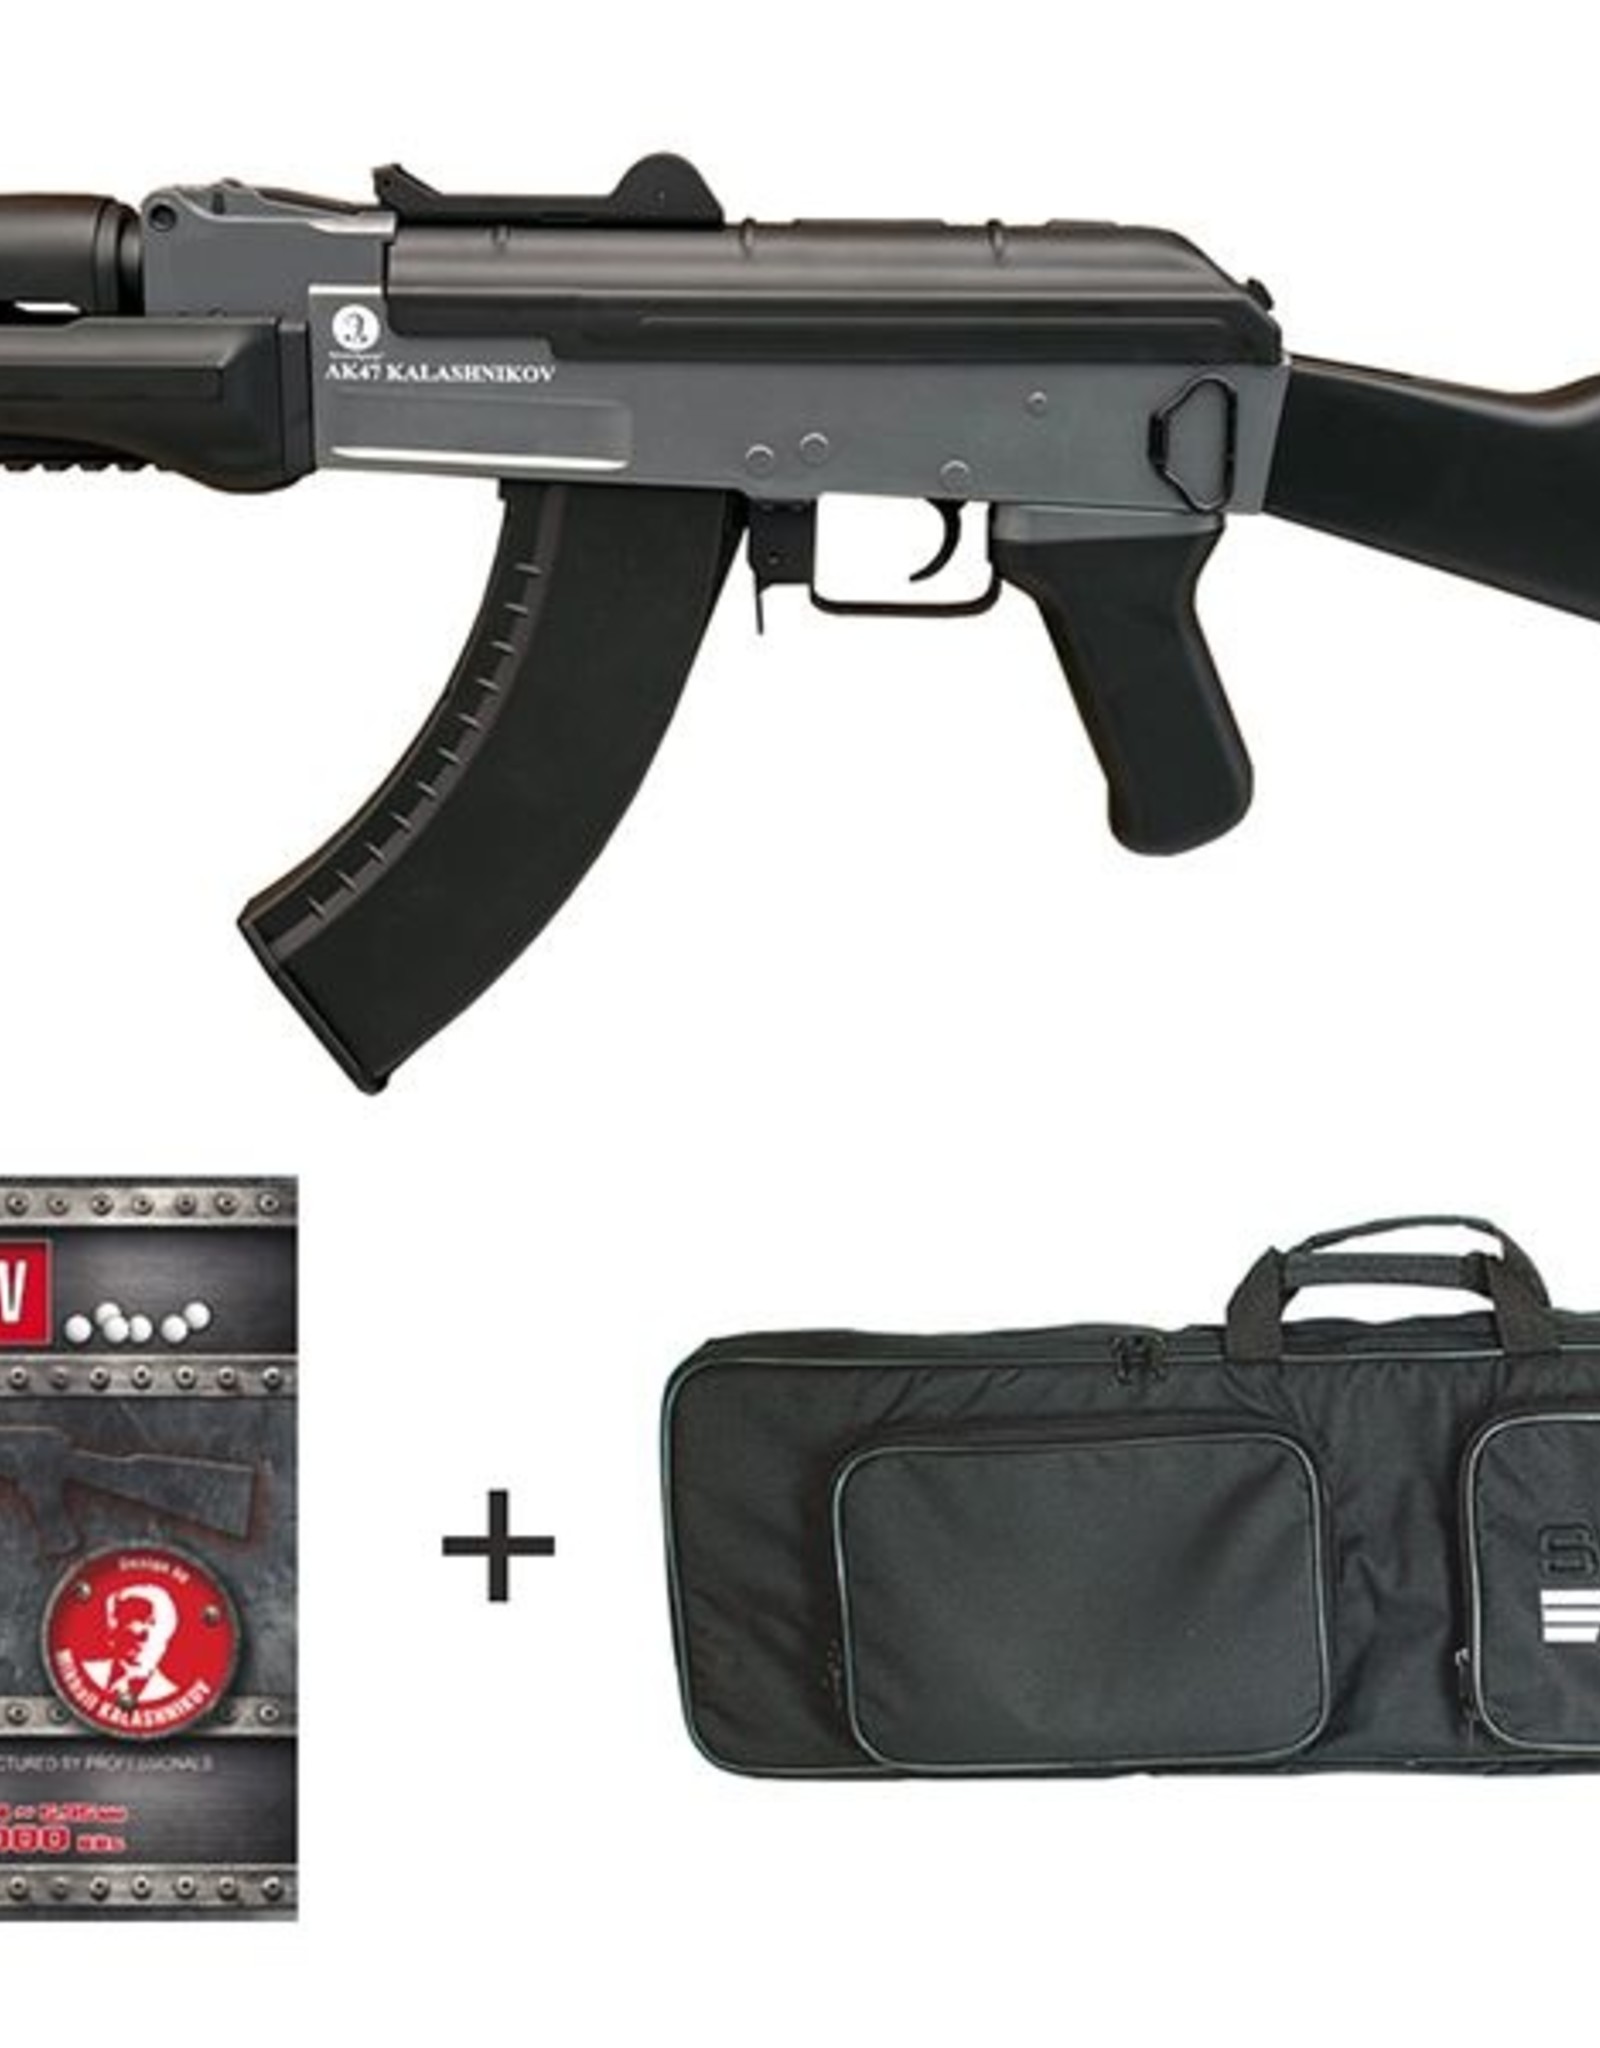 CYBERGUN Kalashnikov Beta Spetsnaz AK AEG (With Bat. and Charger, 1 Kilo 0.25g BB Pellets and Rifle Bag